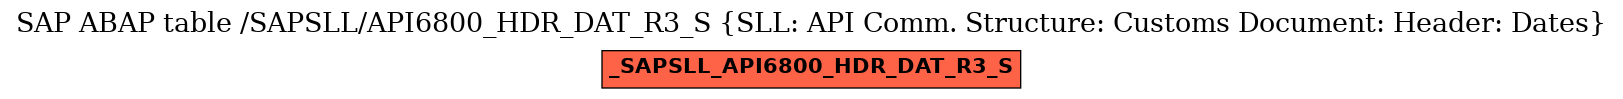 E-R Diagram for table /SAPSLL/API6800_HDR_DAT_R3_S (SLL: API Comm. Structure: Customs Document: Header: Dates)